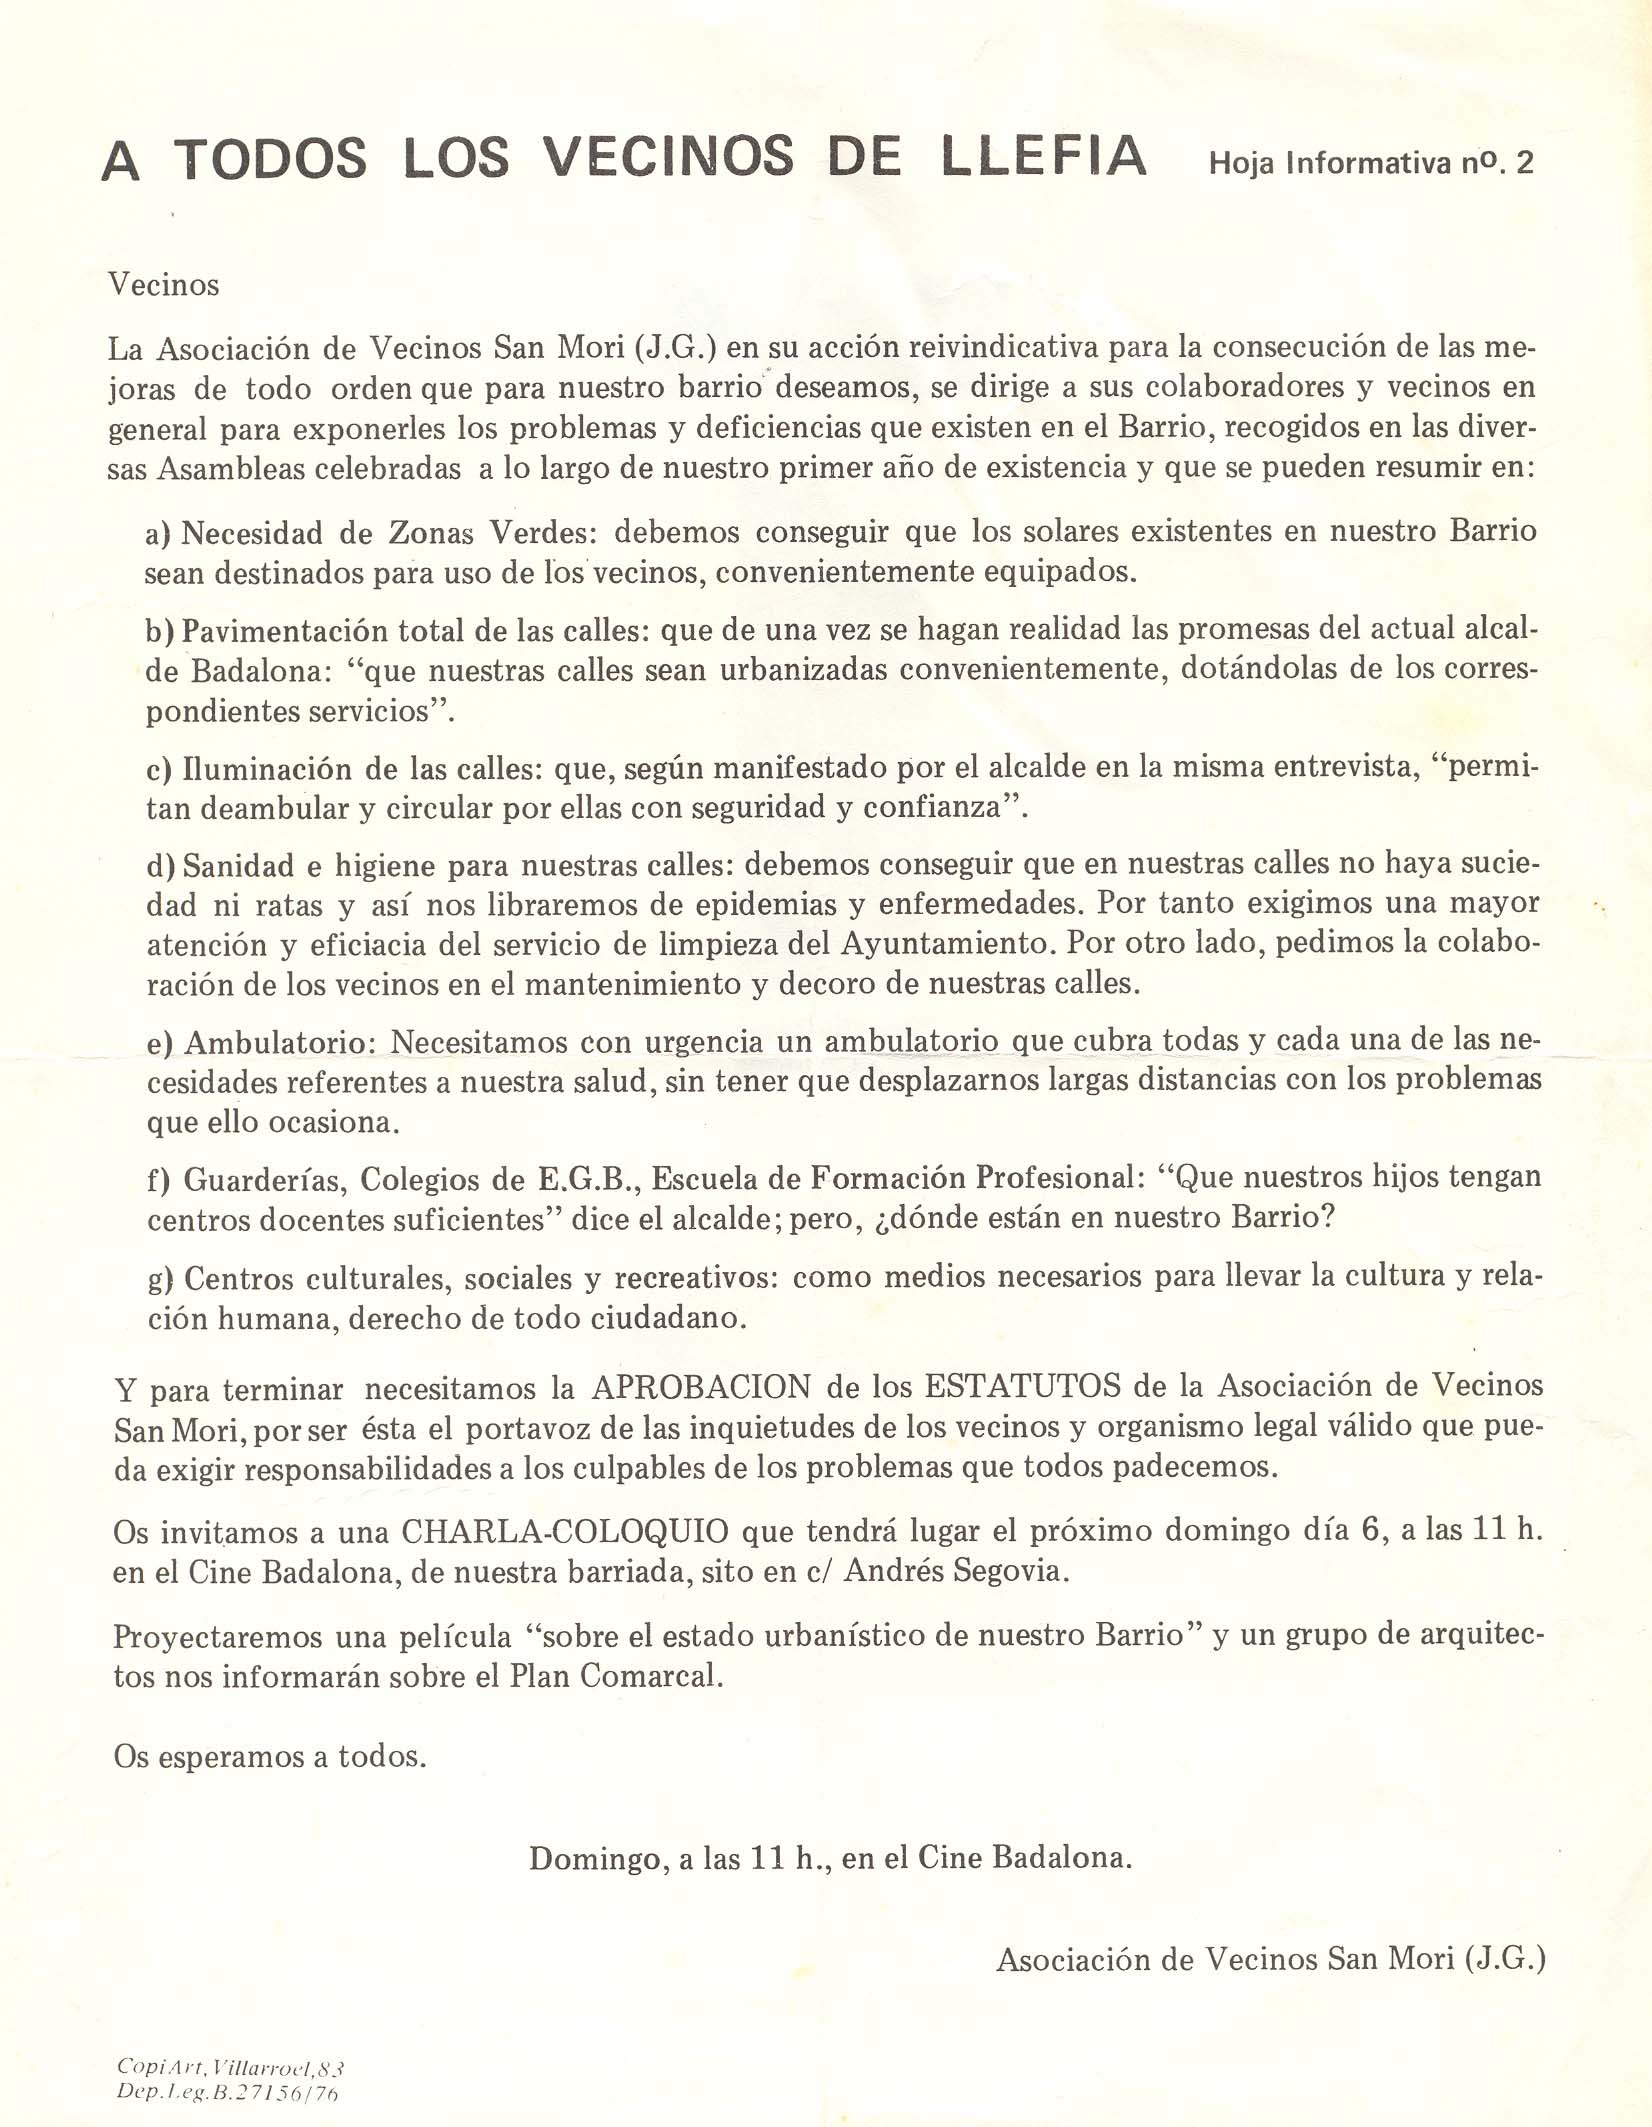 1976 Full informatiu núm. 2 AV Sant Mori de Llefià